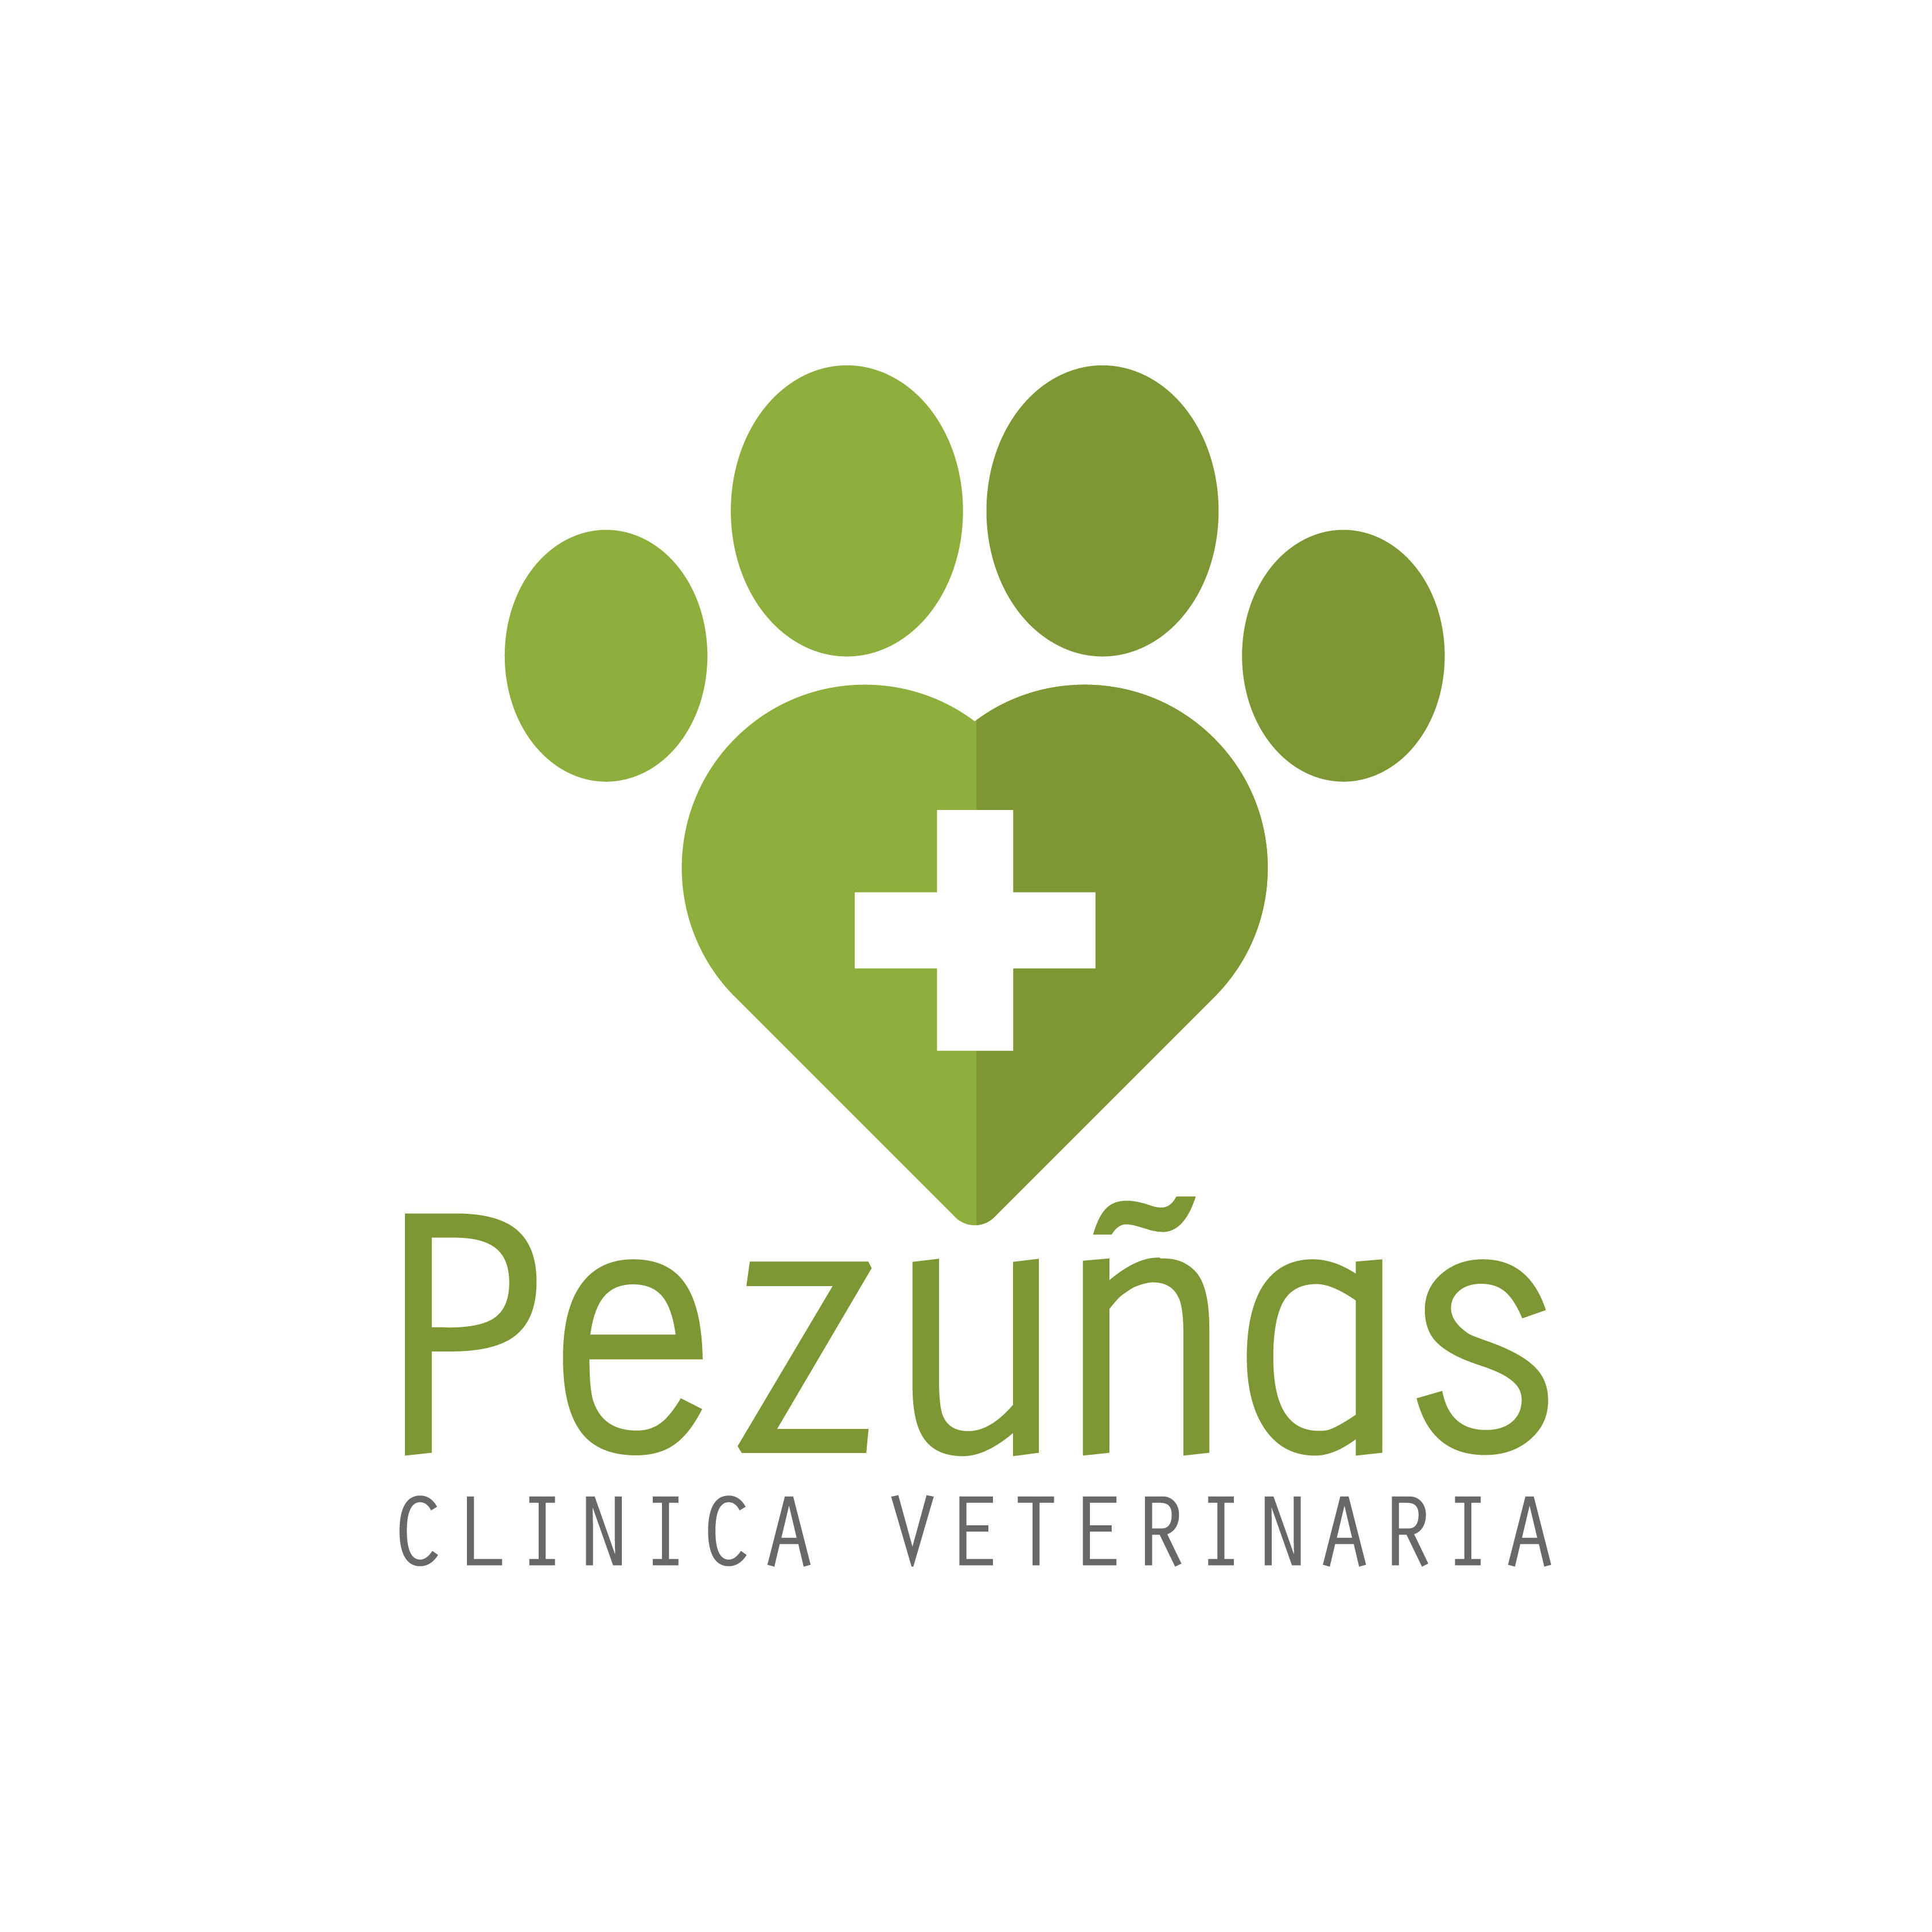 Clínica Veterinaria Pezuñas Logo